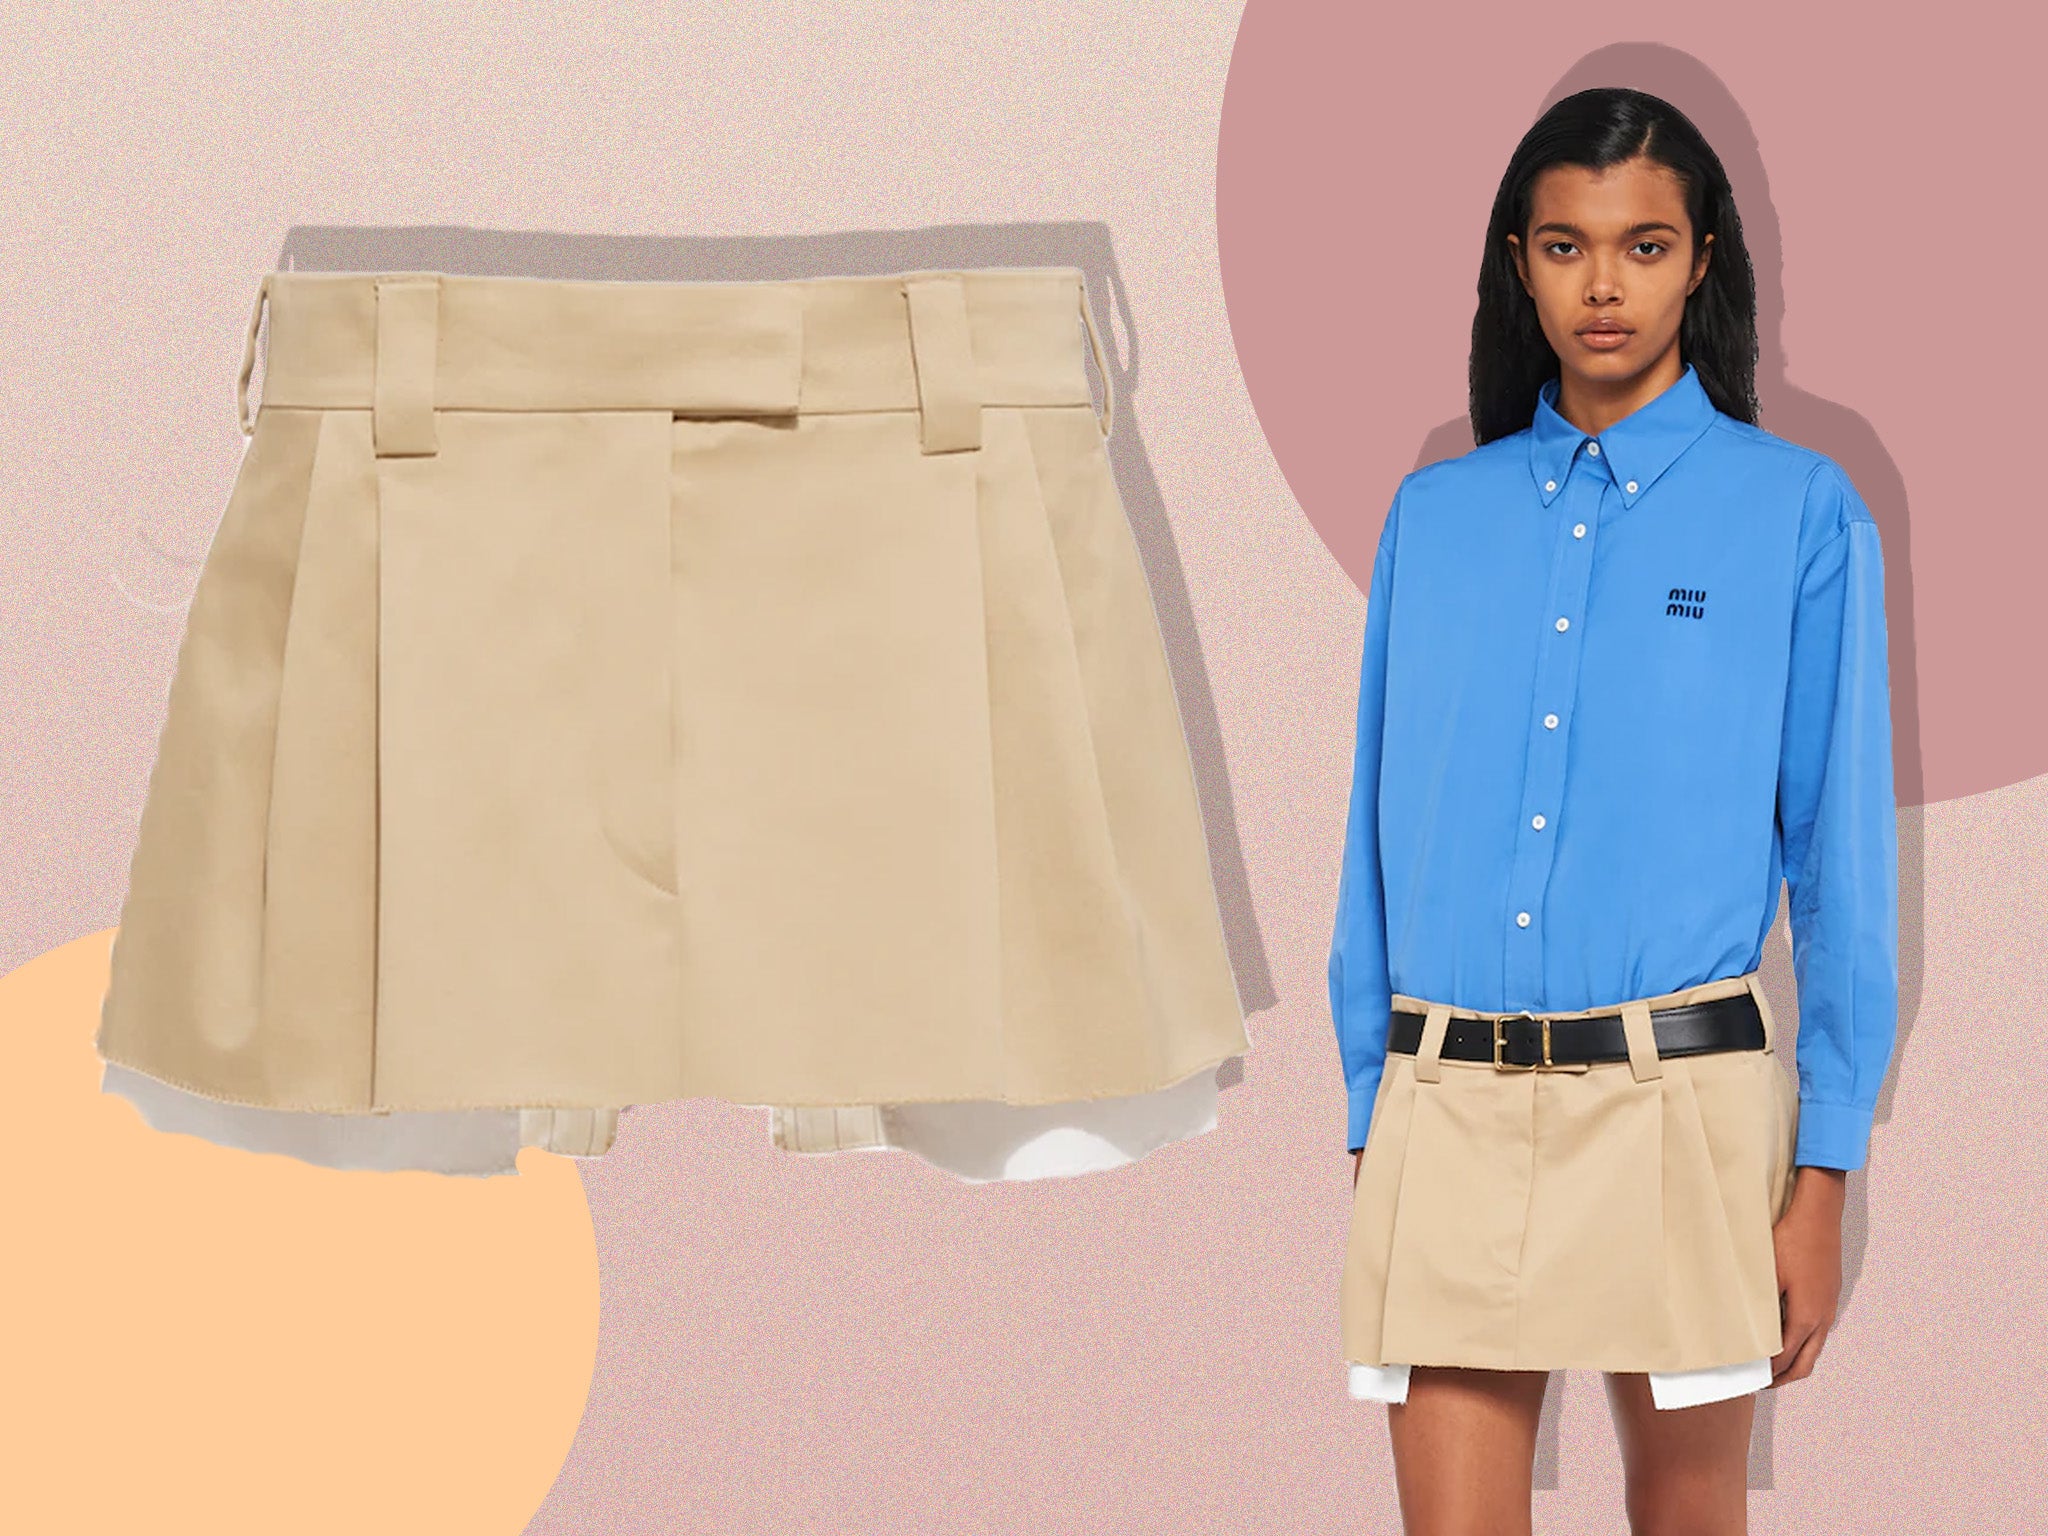 Miu Miu's viral mini skirt is everywhere right now – shop this